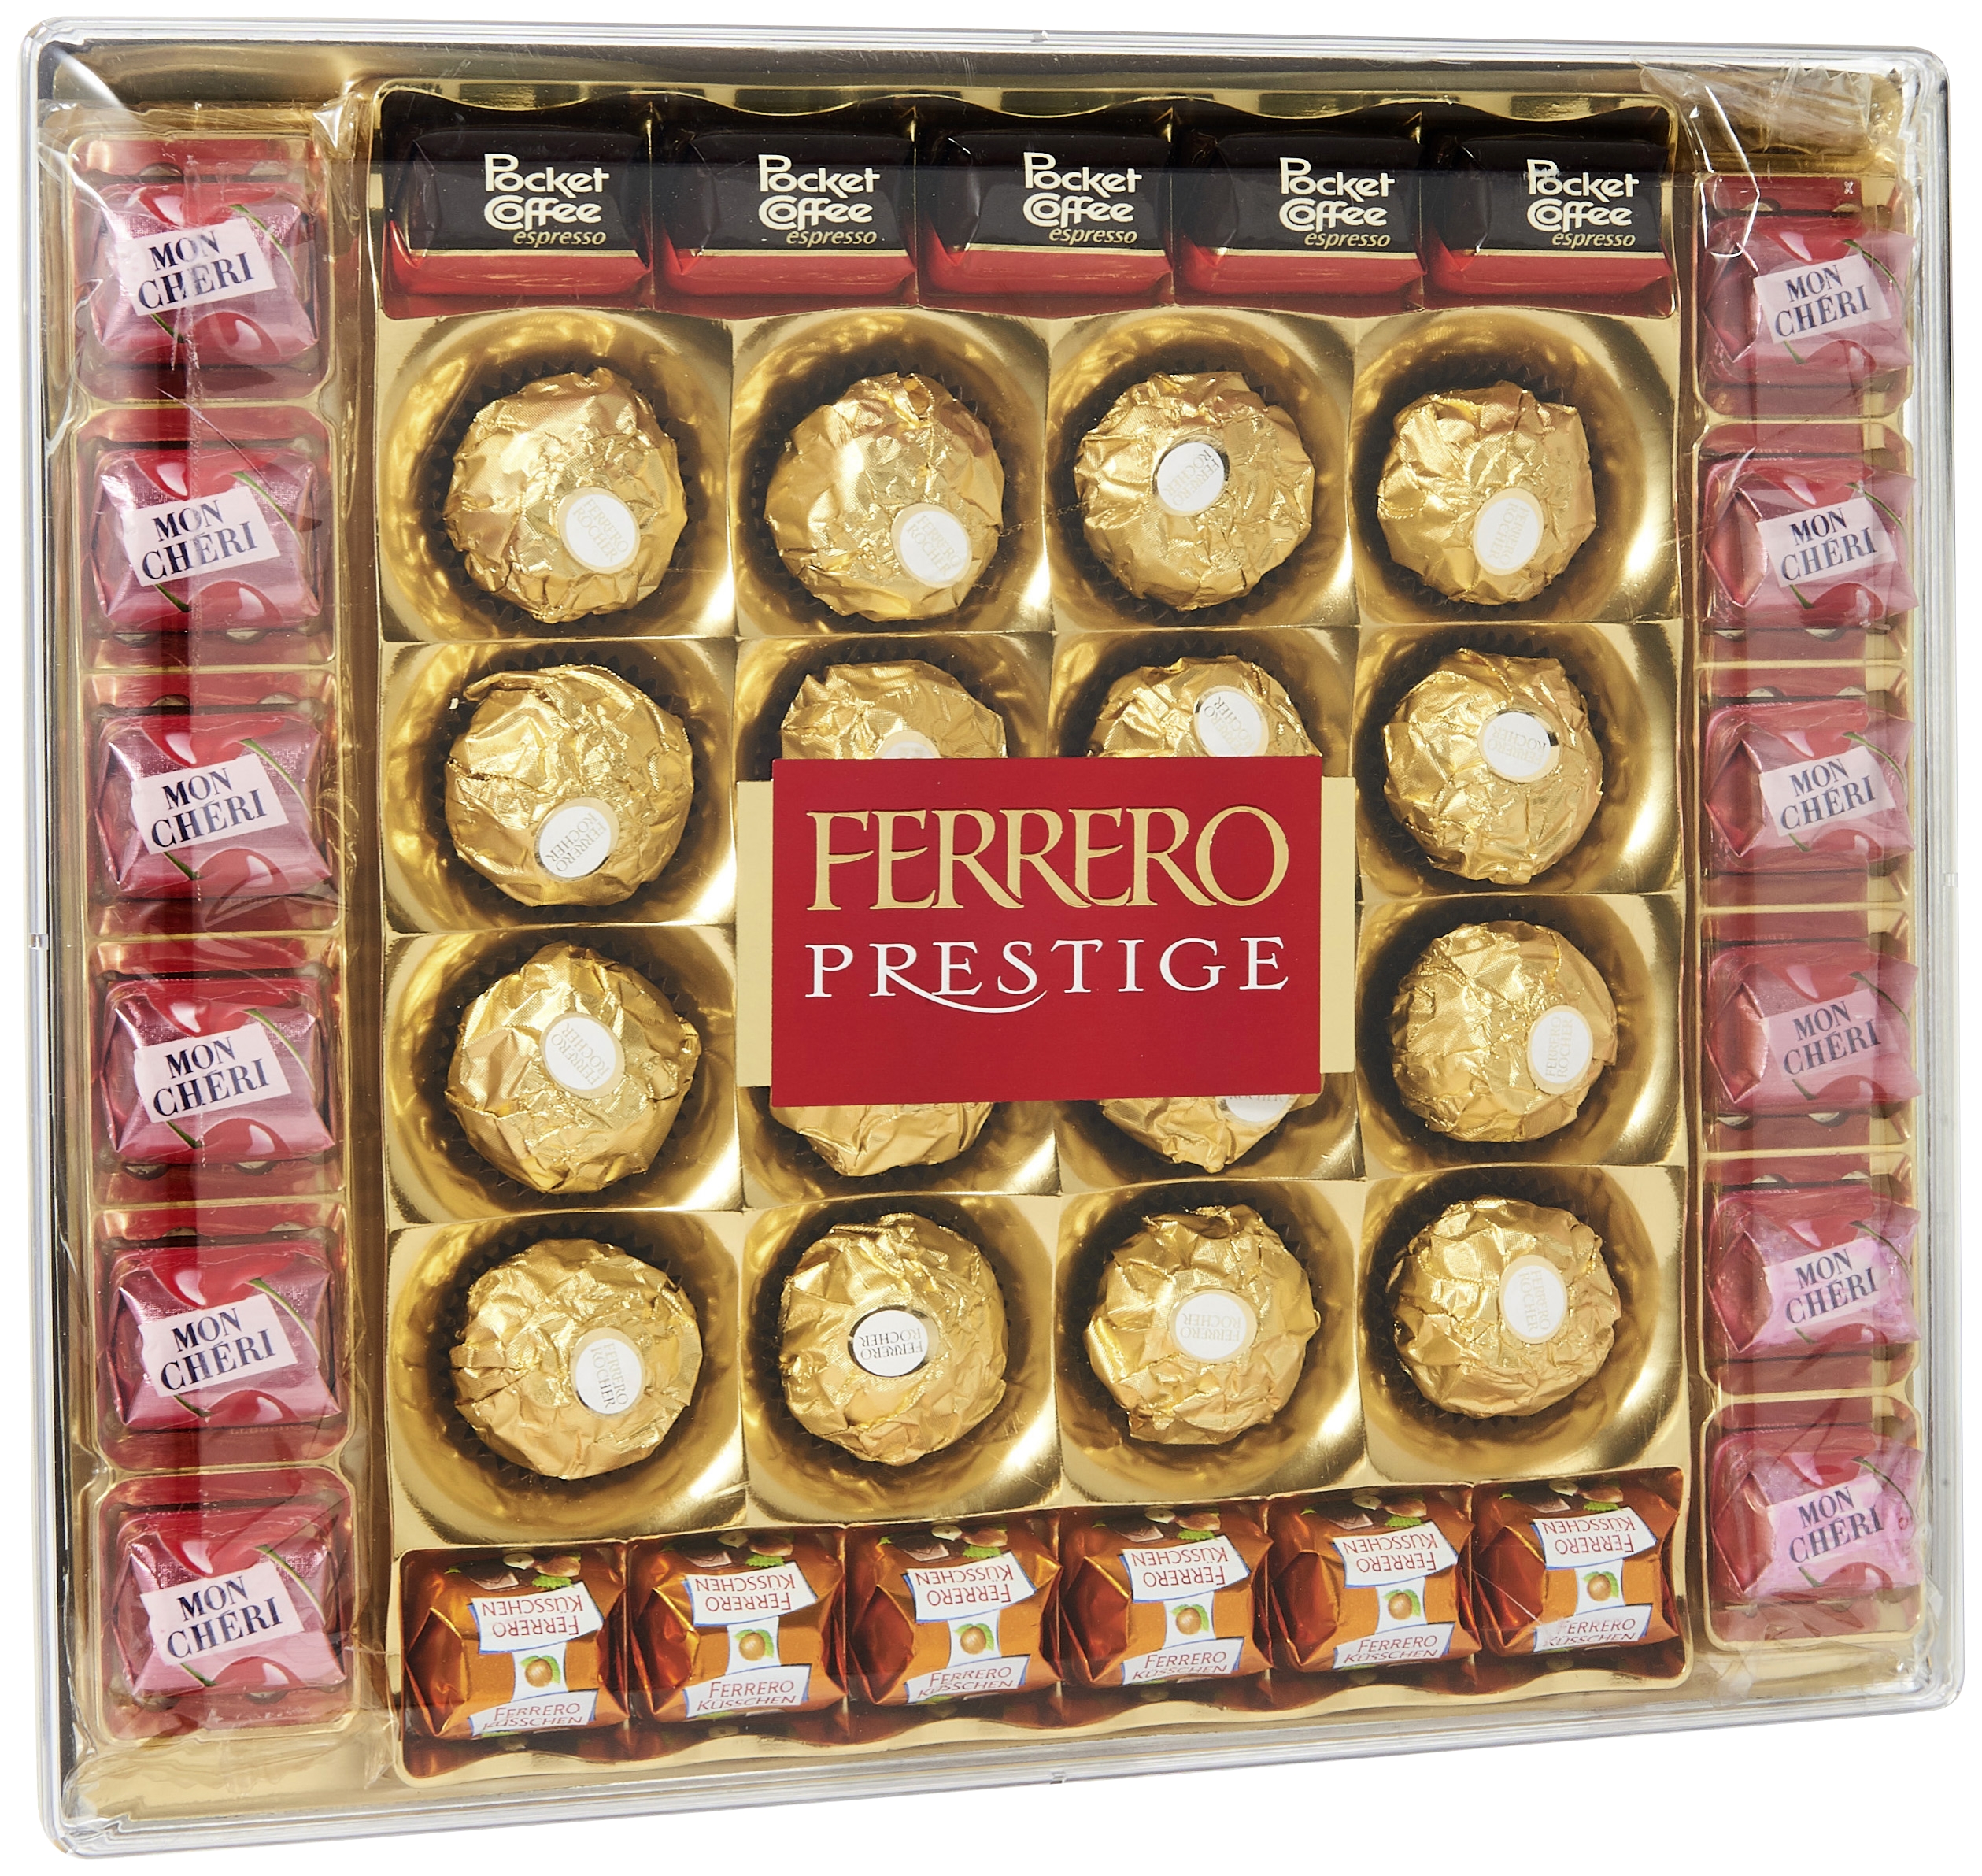 Prestige - Ferrero - 442 g